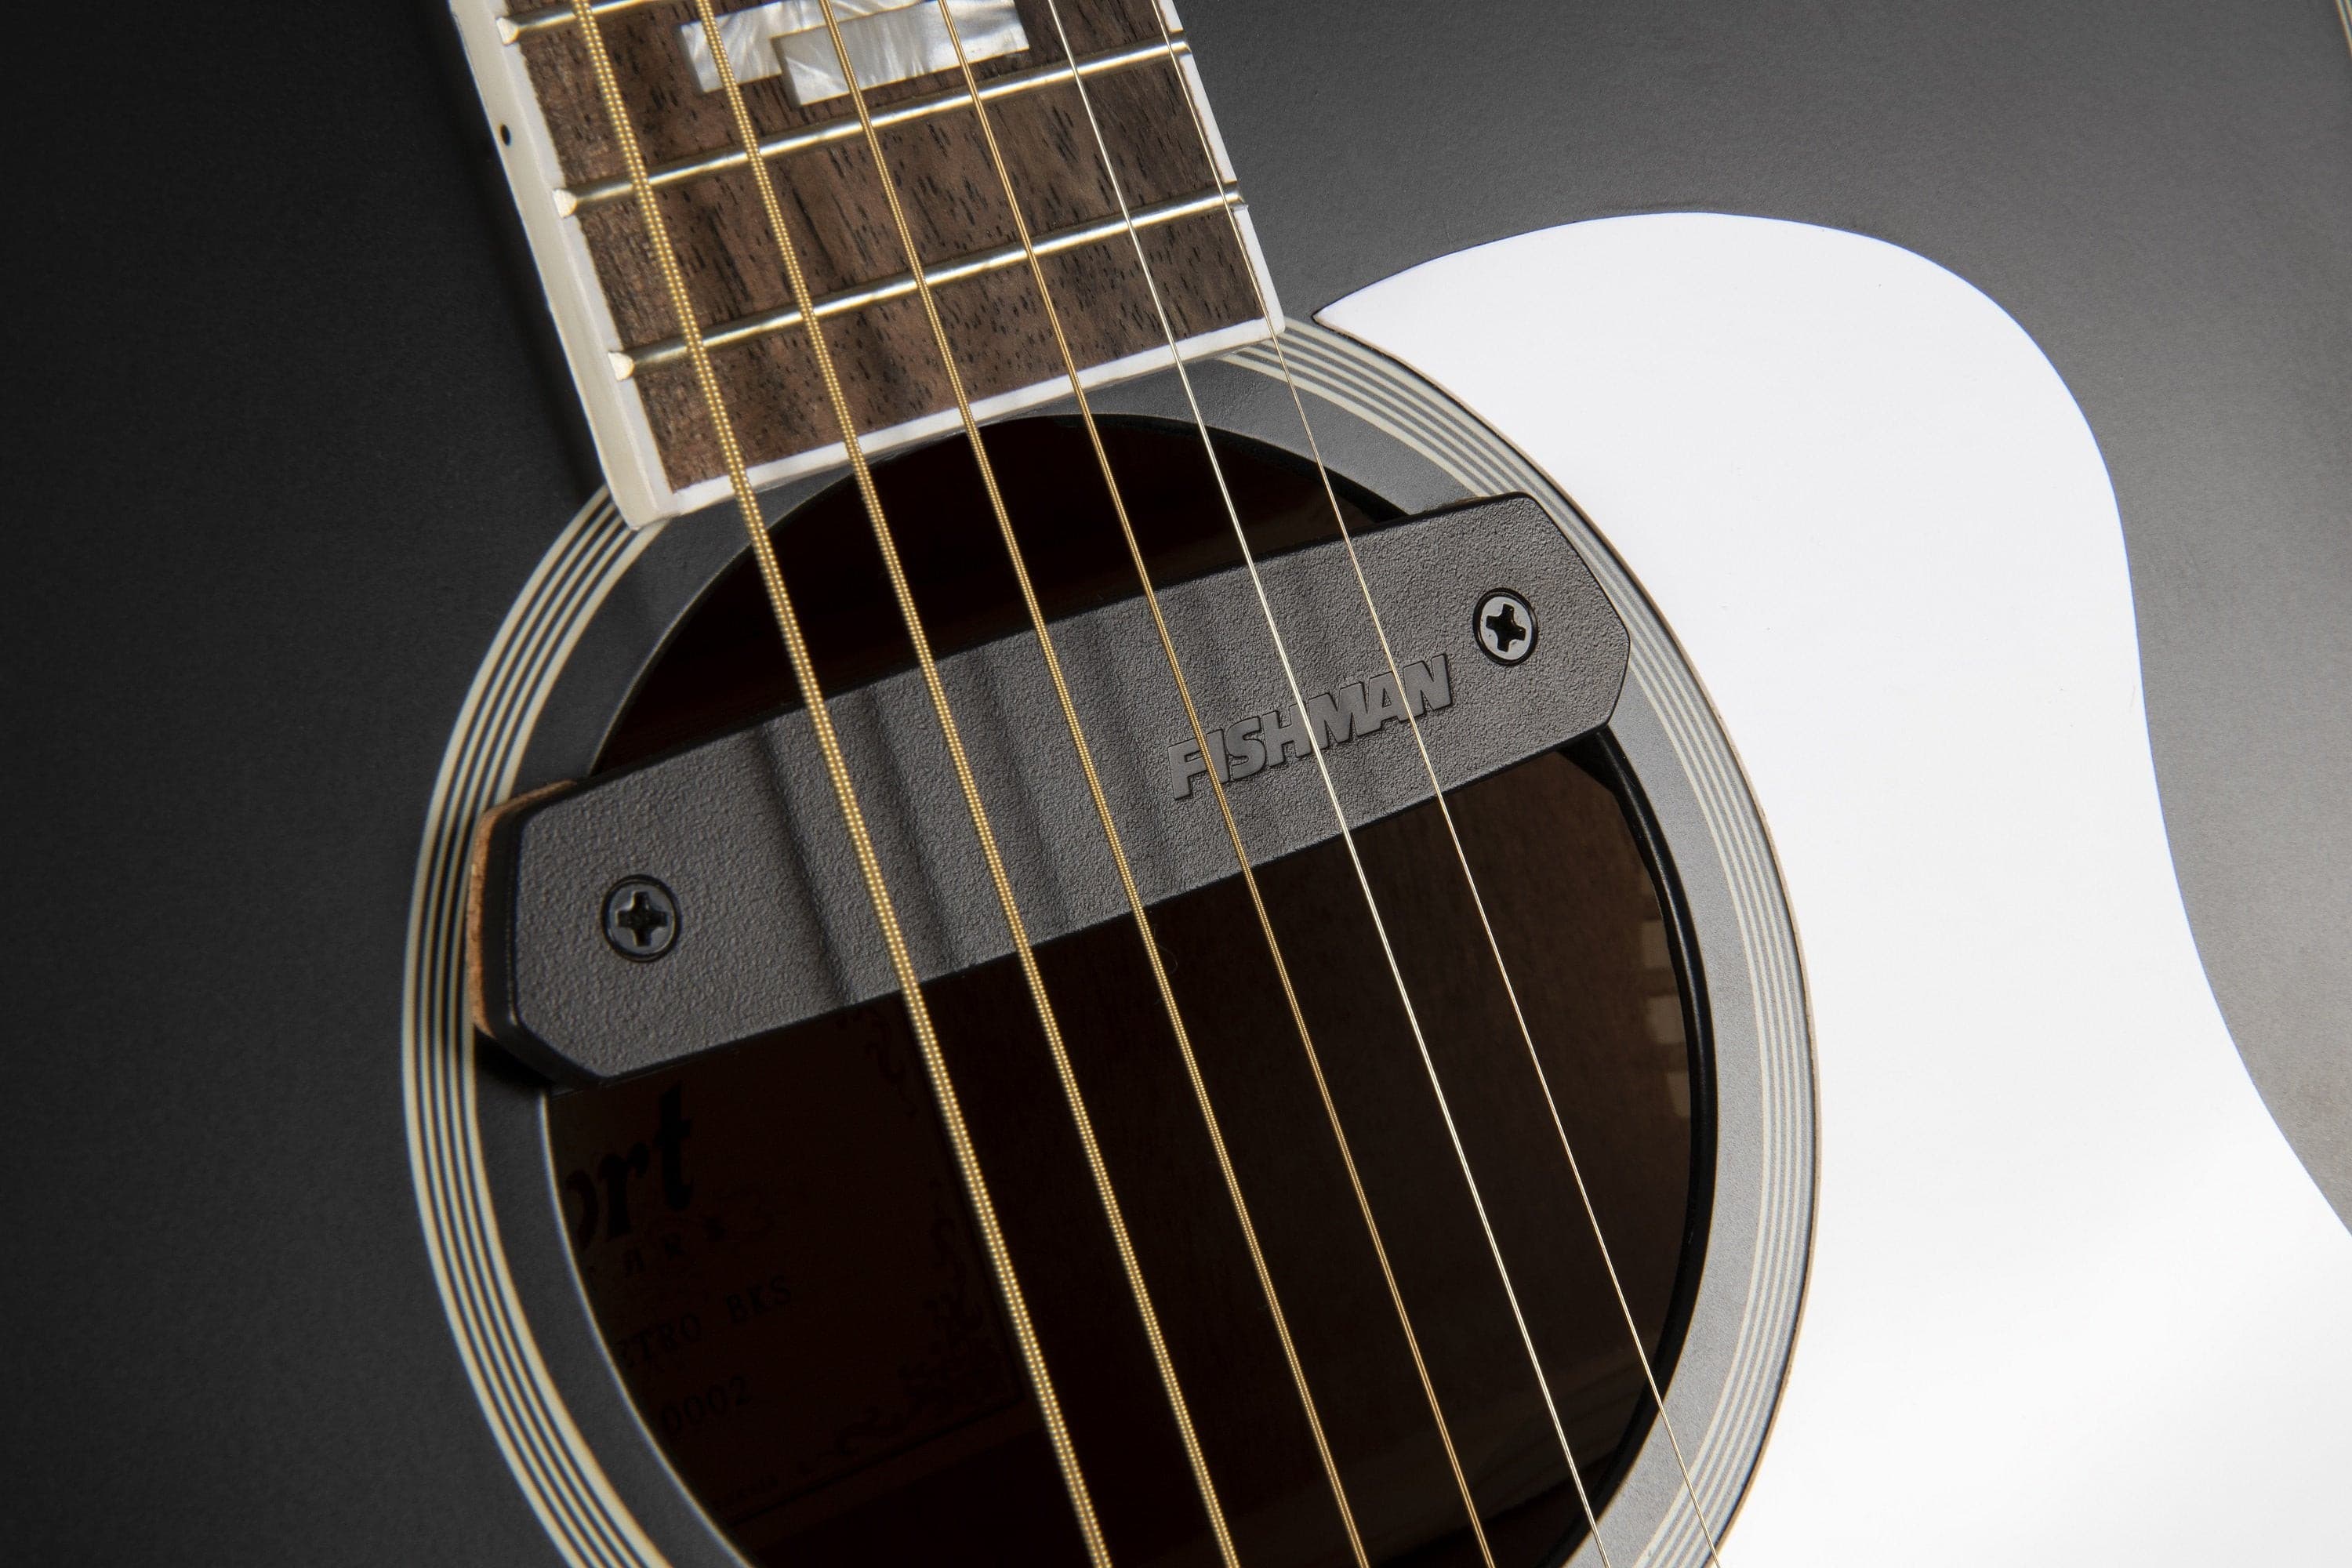 Cort CJ Retro Vintage Black Matte, Acoustic Guitar for sale at Richards Guitars.